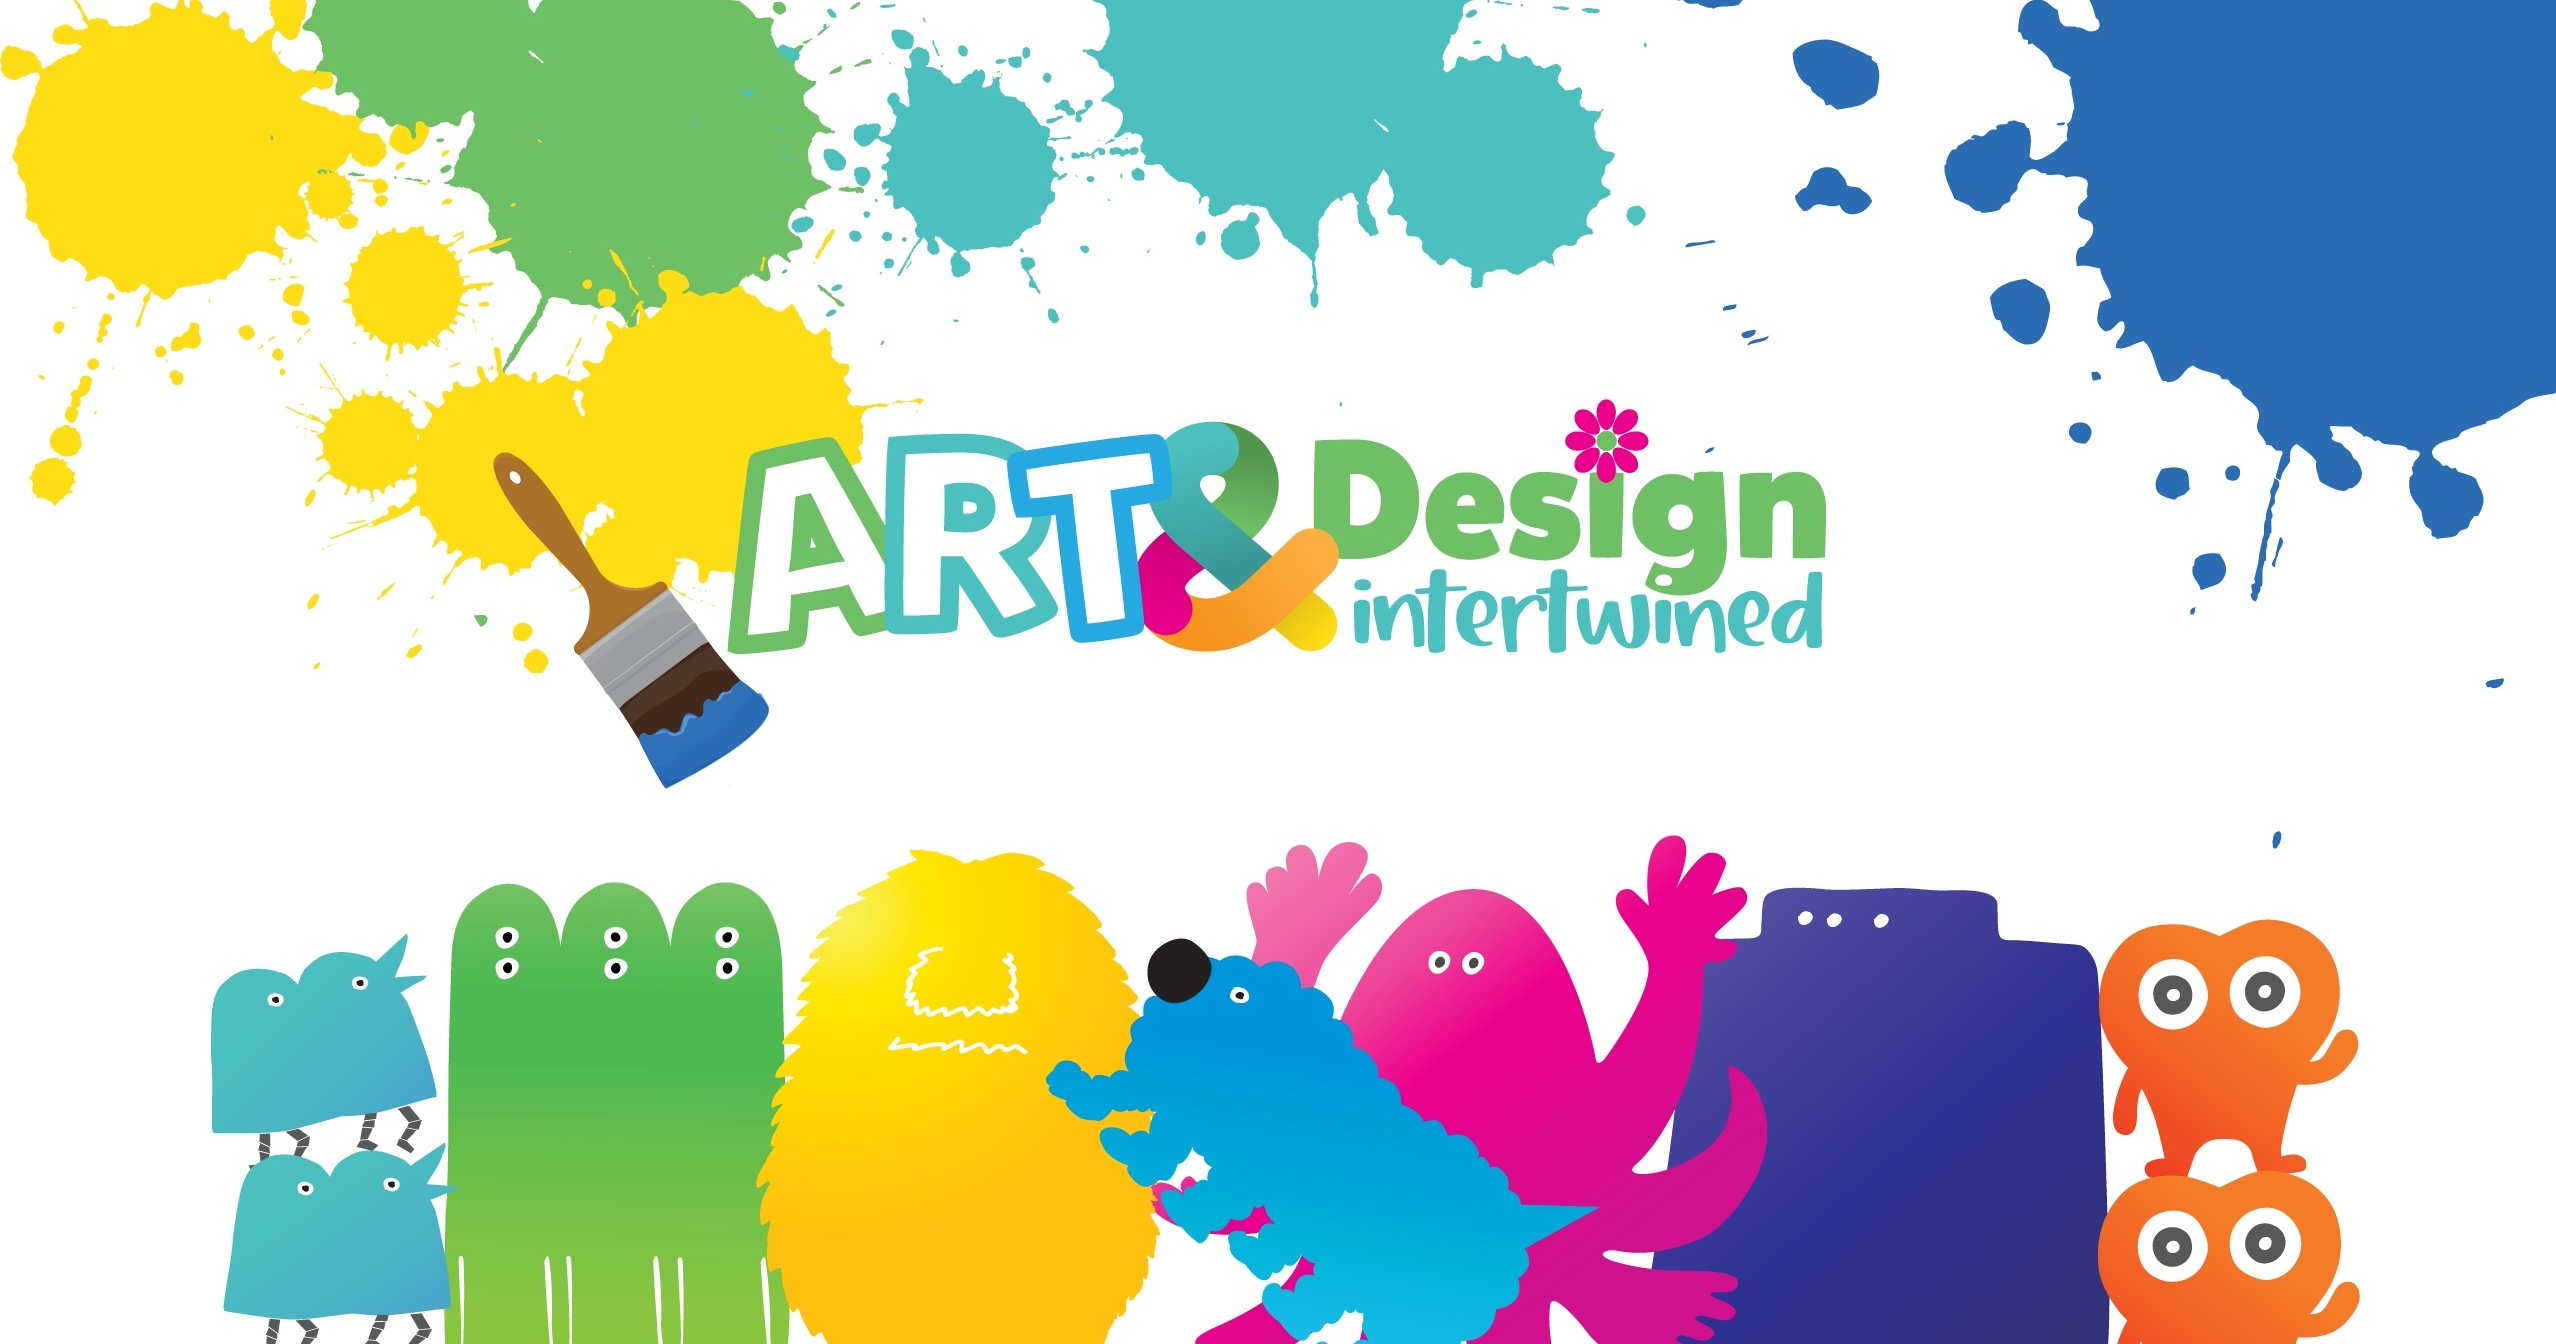 Art&Design Intertwind exhibit at the Children's Creativity Museum